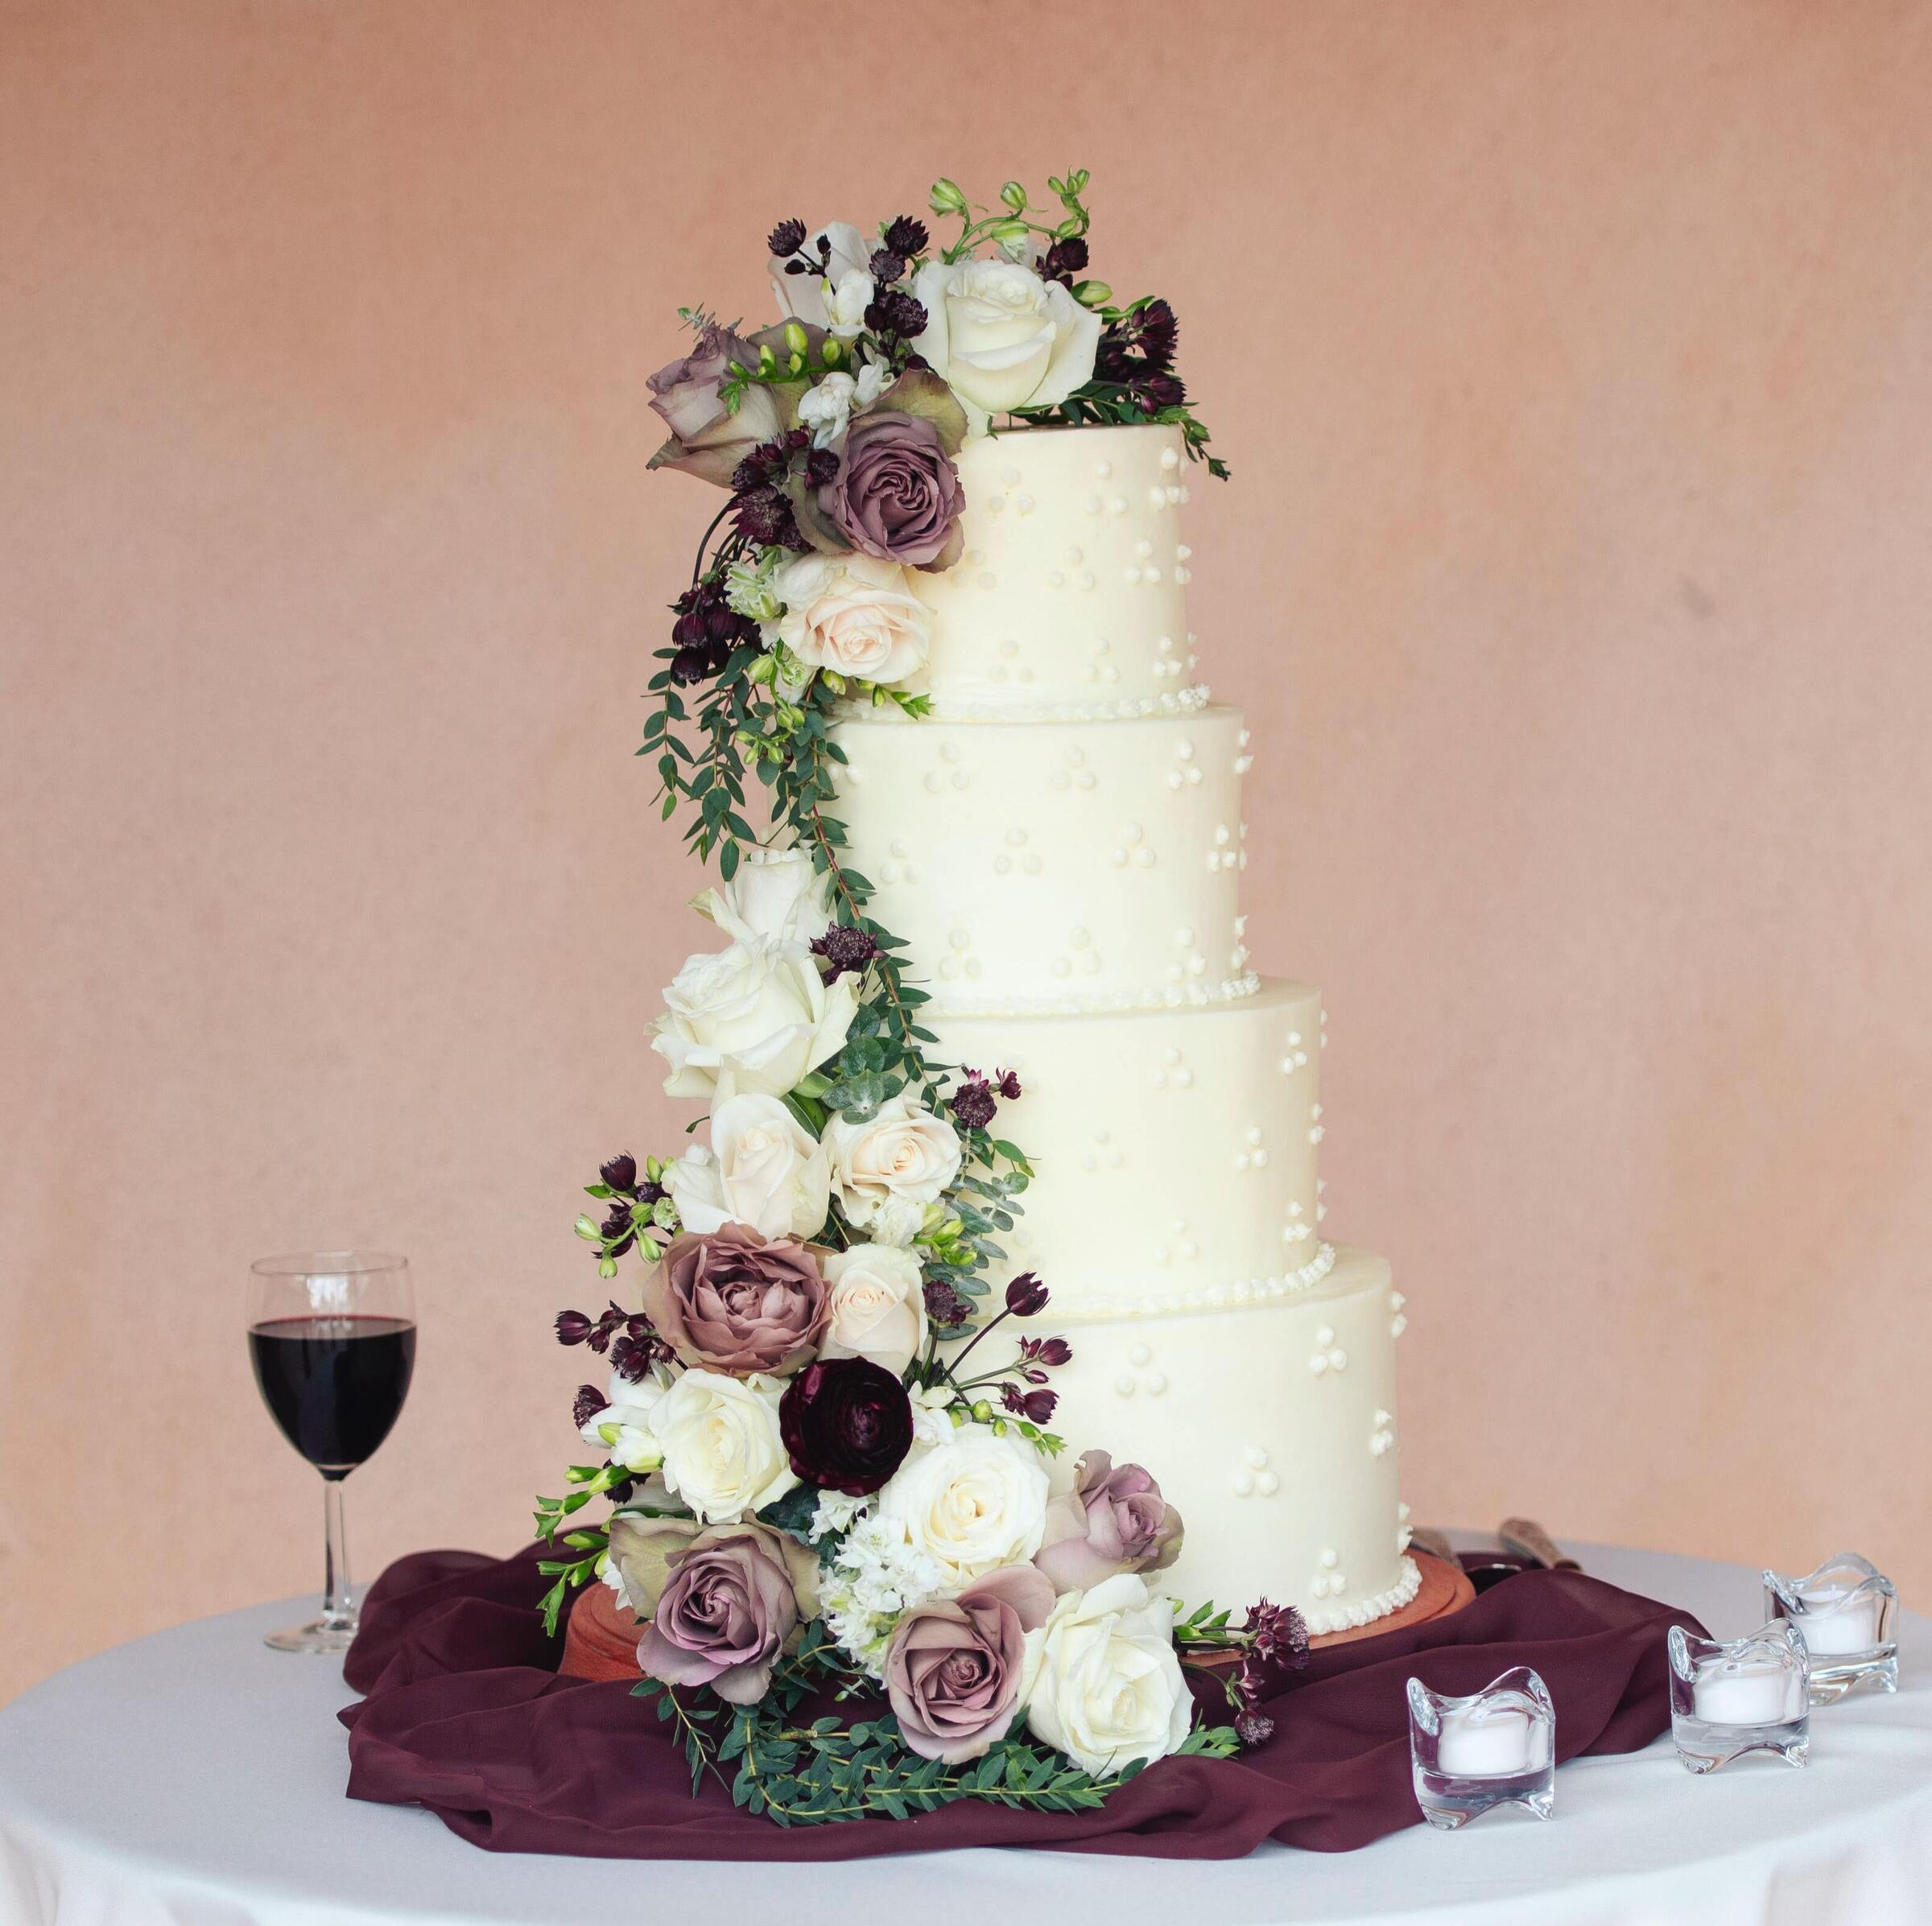 Fondant Wedding Cakes NJ | The Best Custom Fondant Wedding Cake Designs